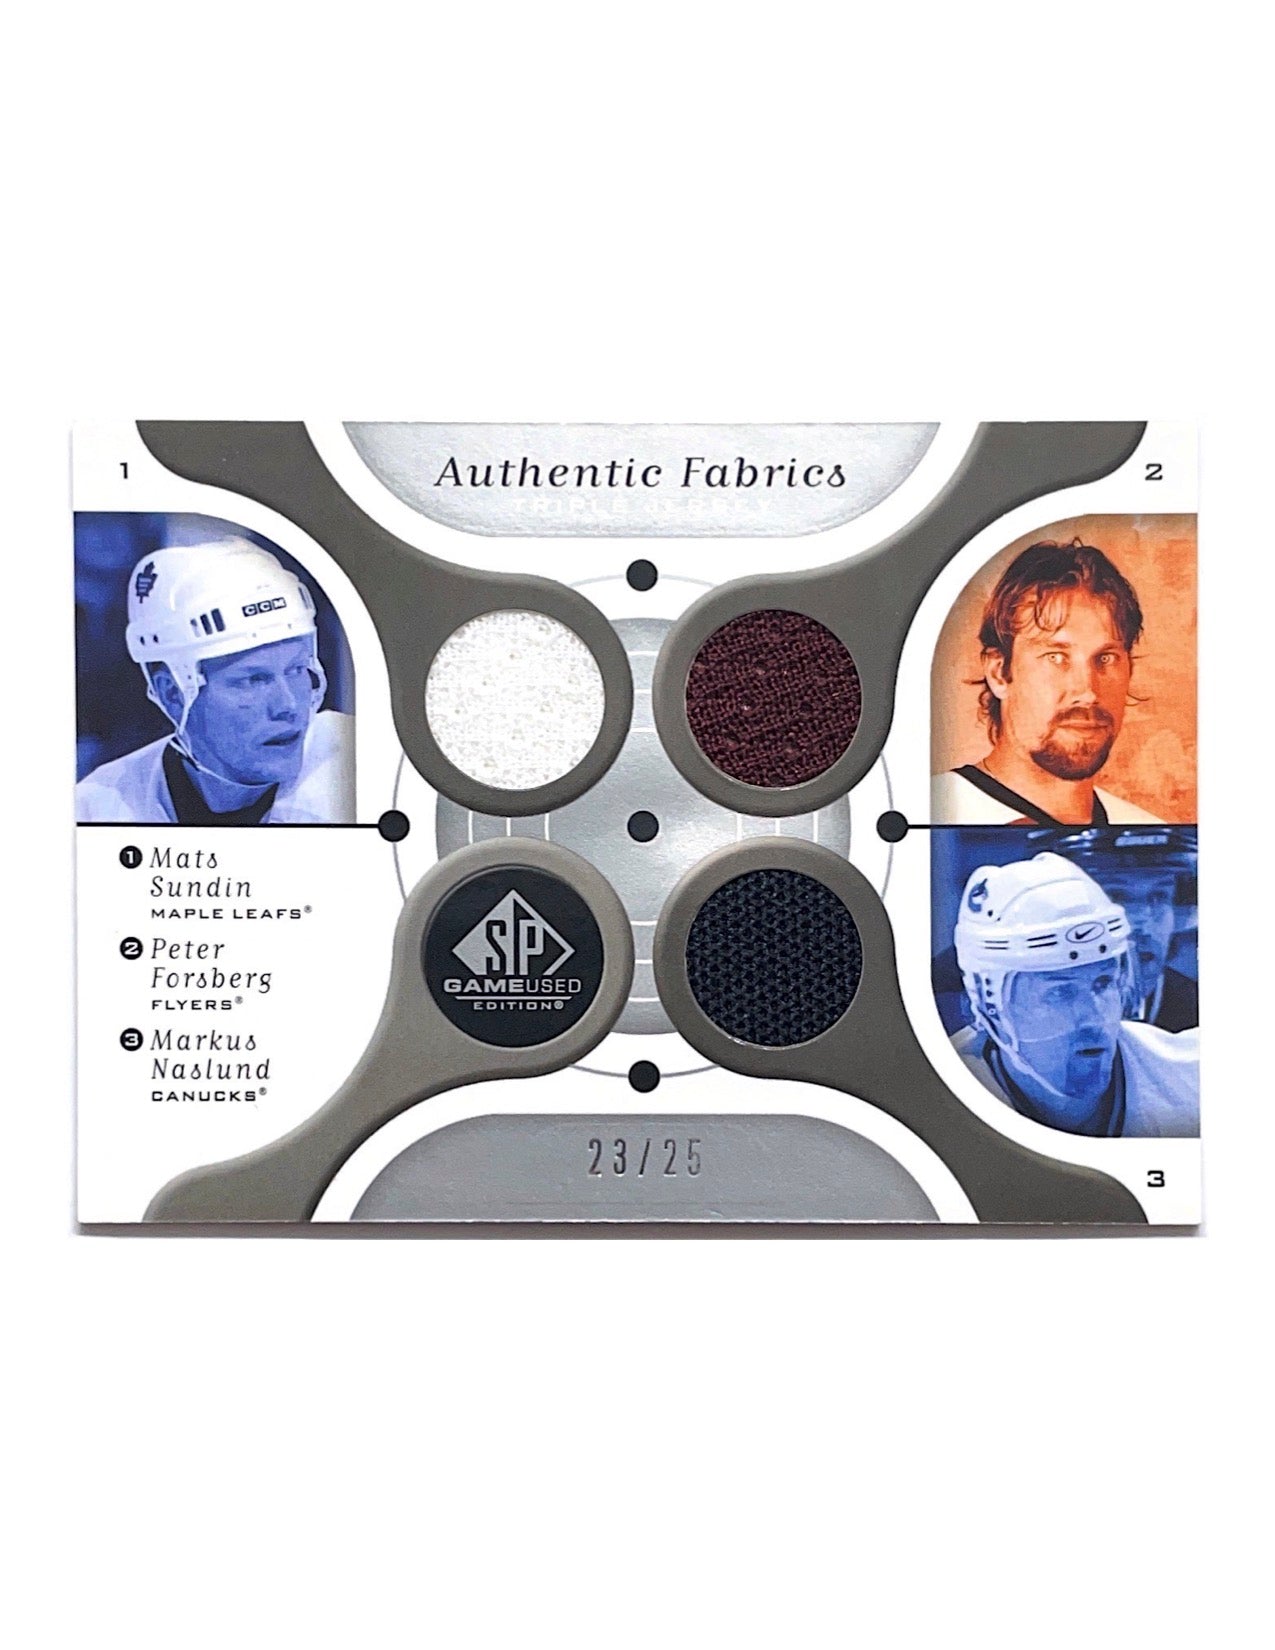 Mats Sundin/Peter Forsberg/Markus Naslund 2005-06 Upper Deck SP Game Used Authentic Fabrics Triple Jersey #AF3-SFN - 23/25